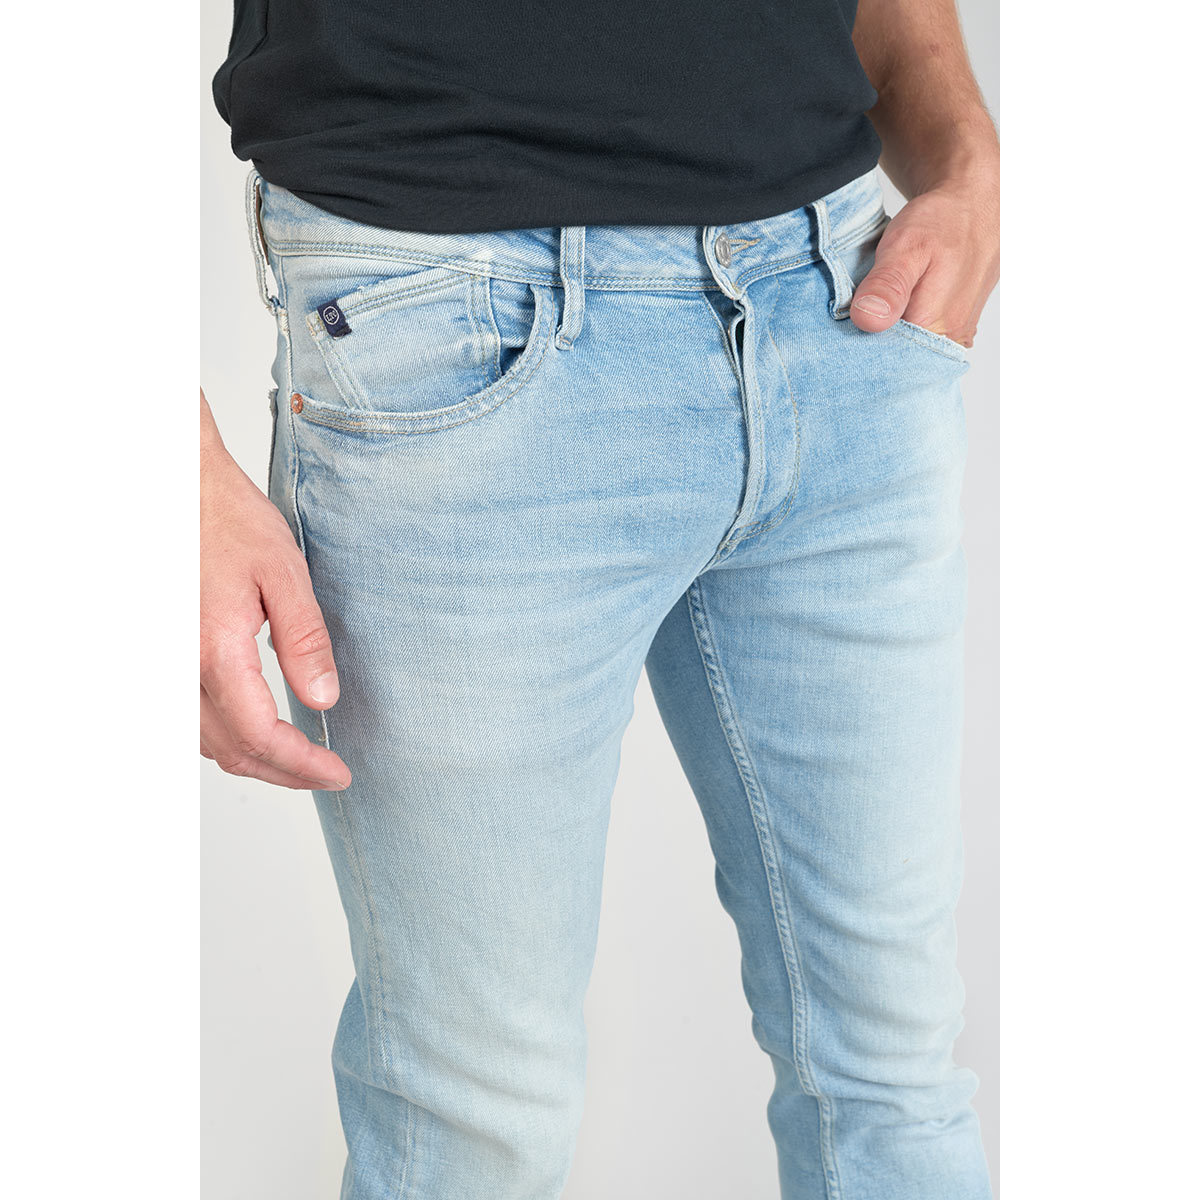 Le Temps des Cerises Bleu Basic 700/11 adjusted jeans bleu CXe3Ojyb